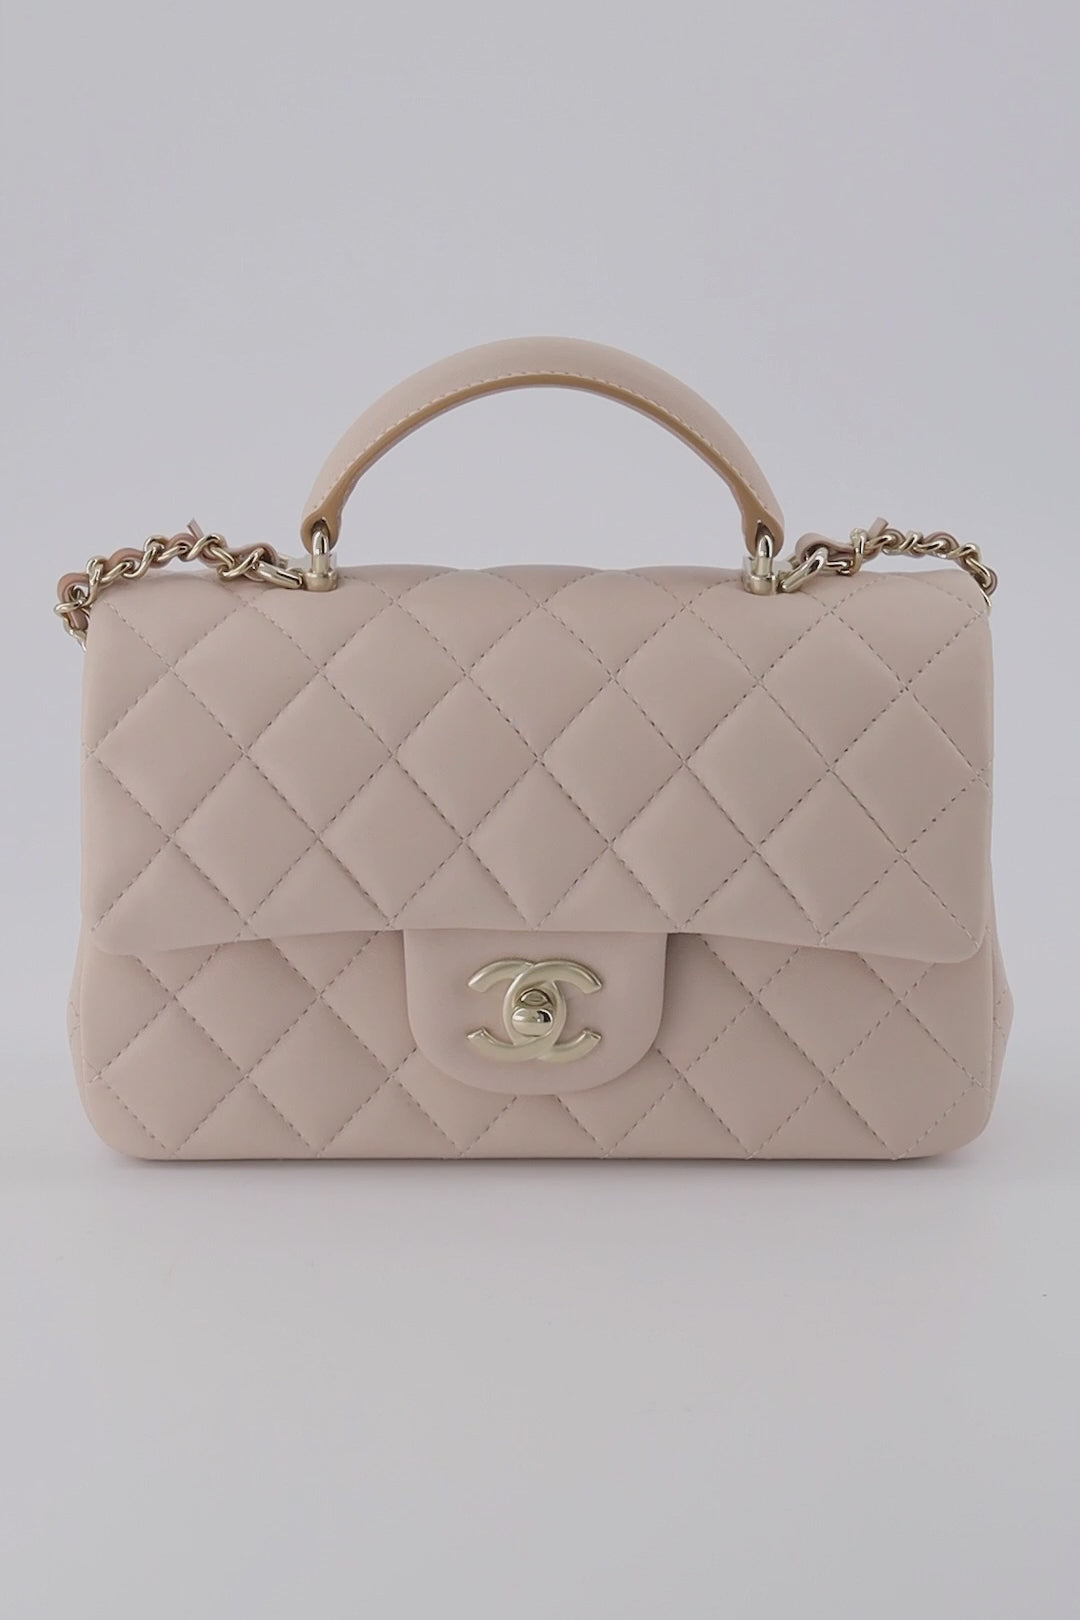 Chanel Mini Handbag Ecru